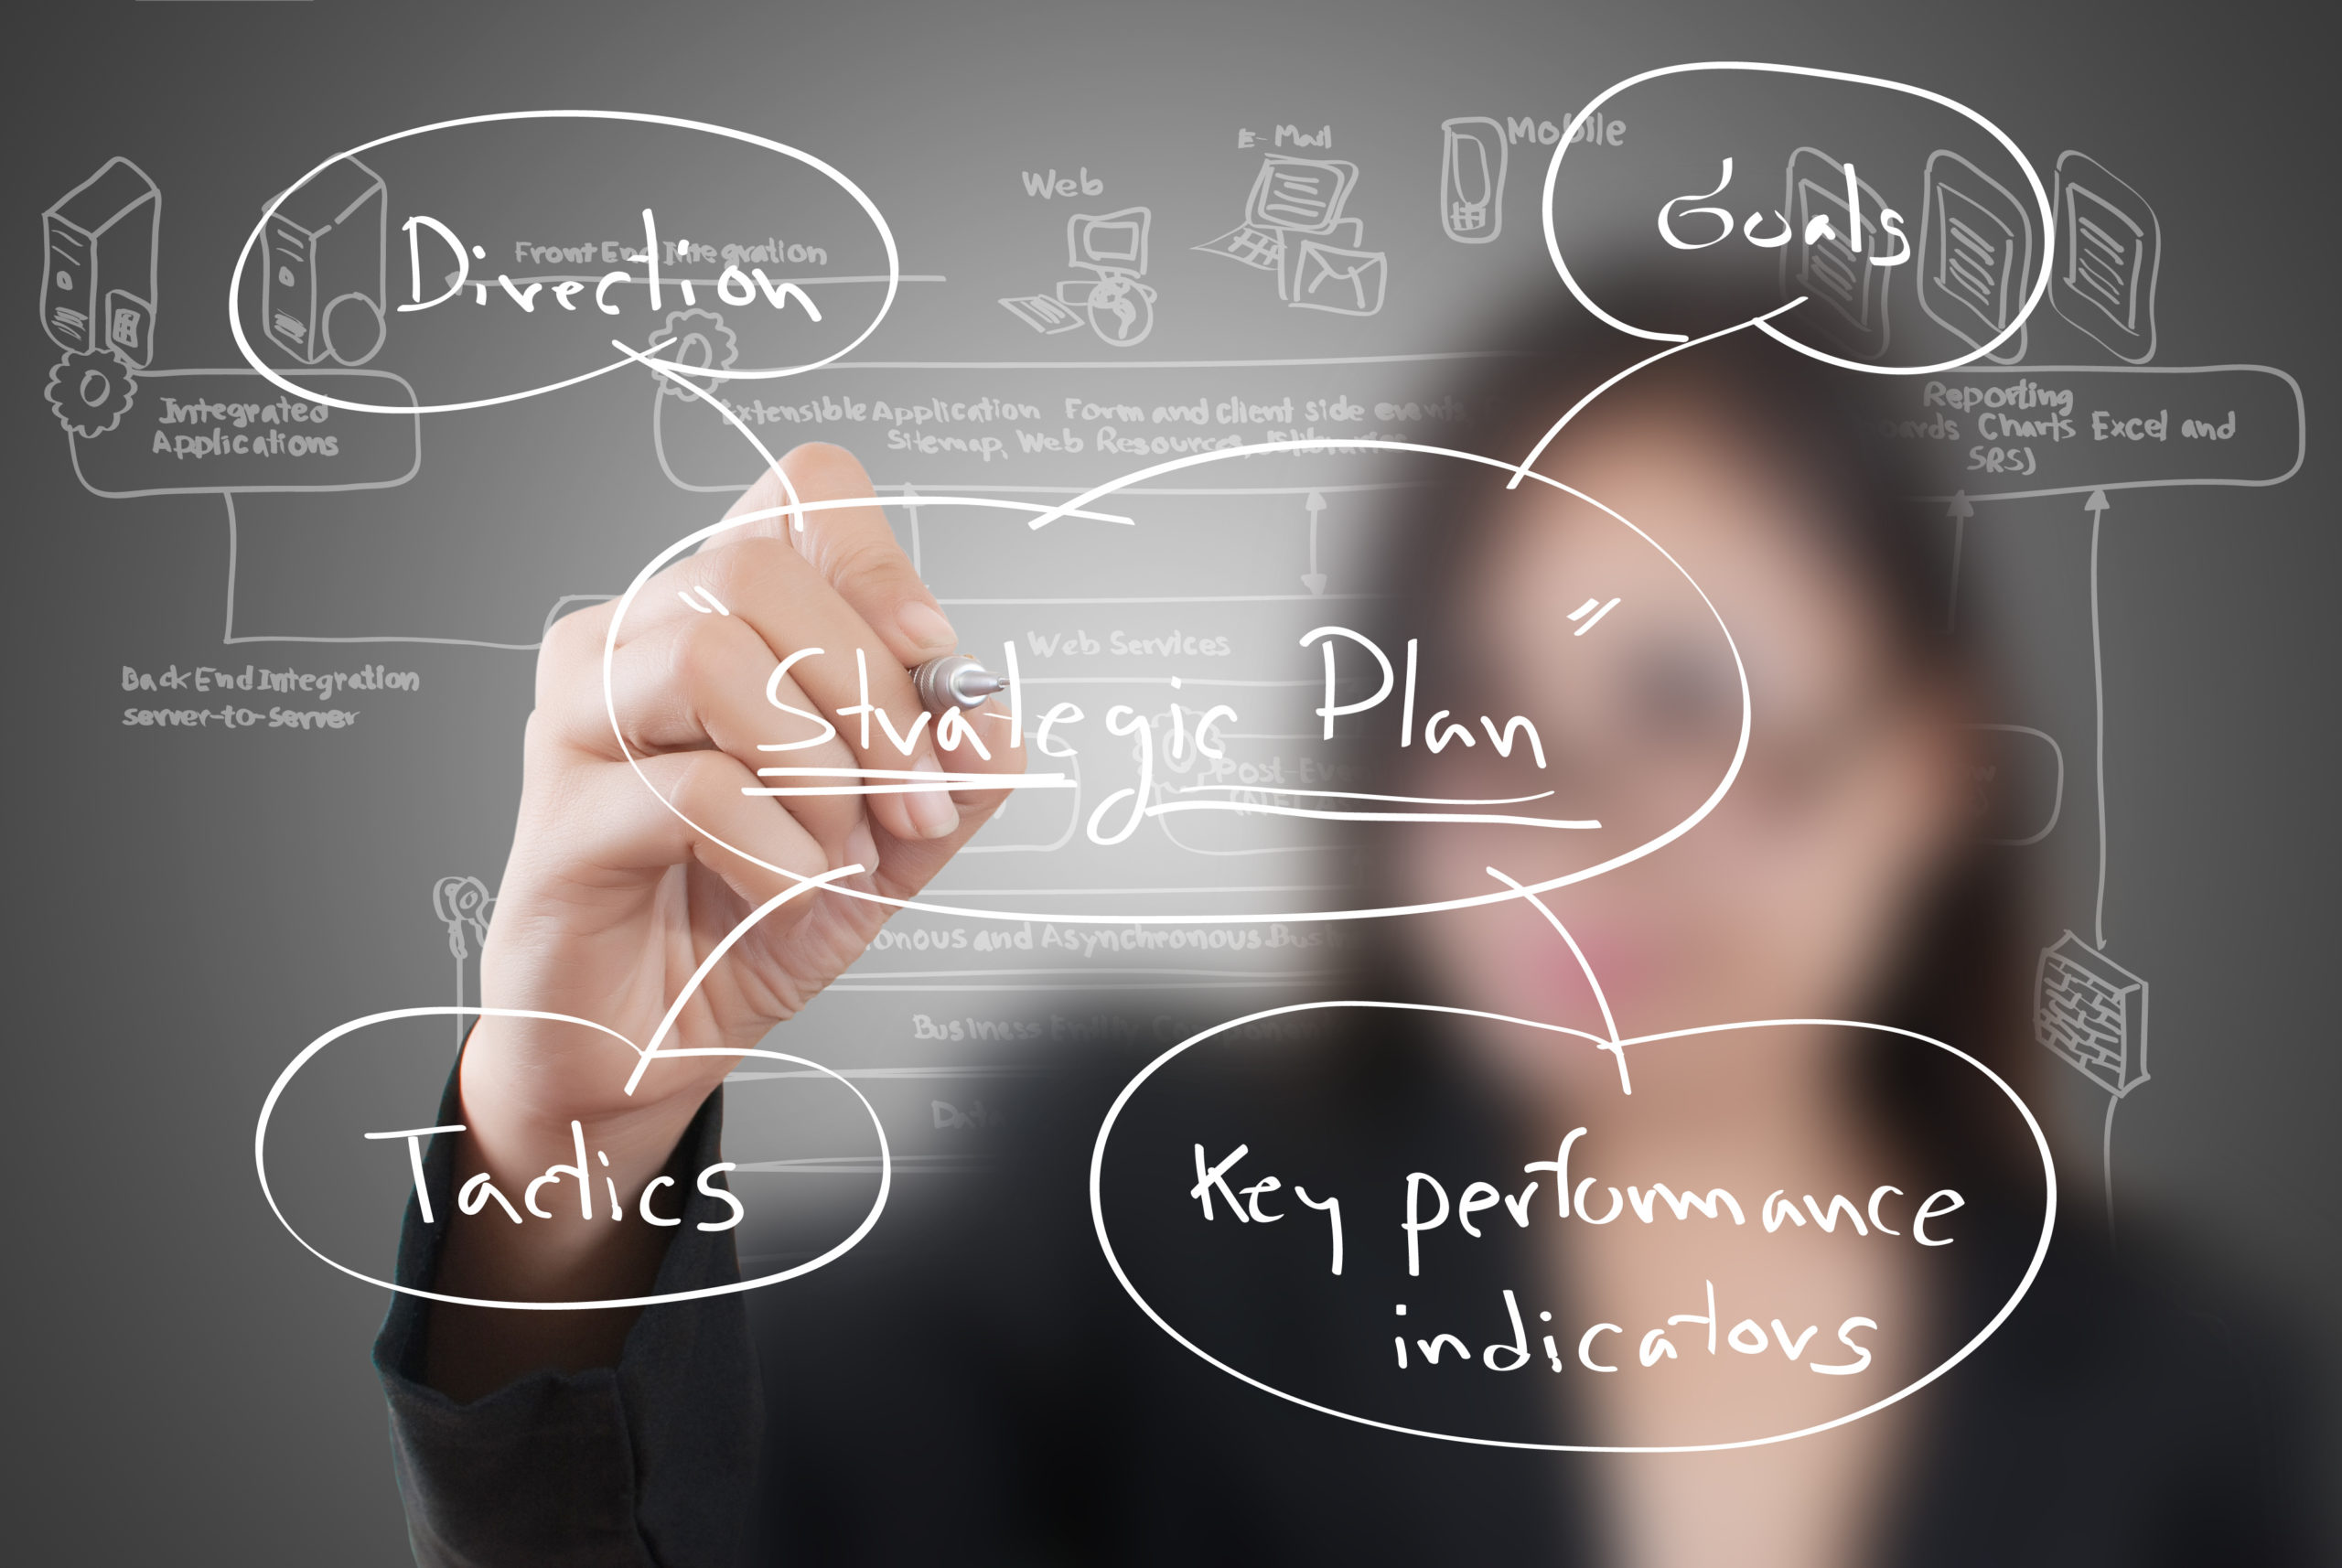 Resources: Strategic Planning